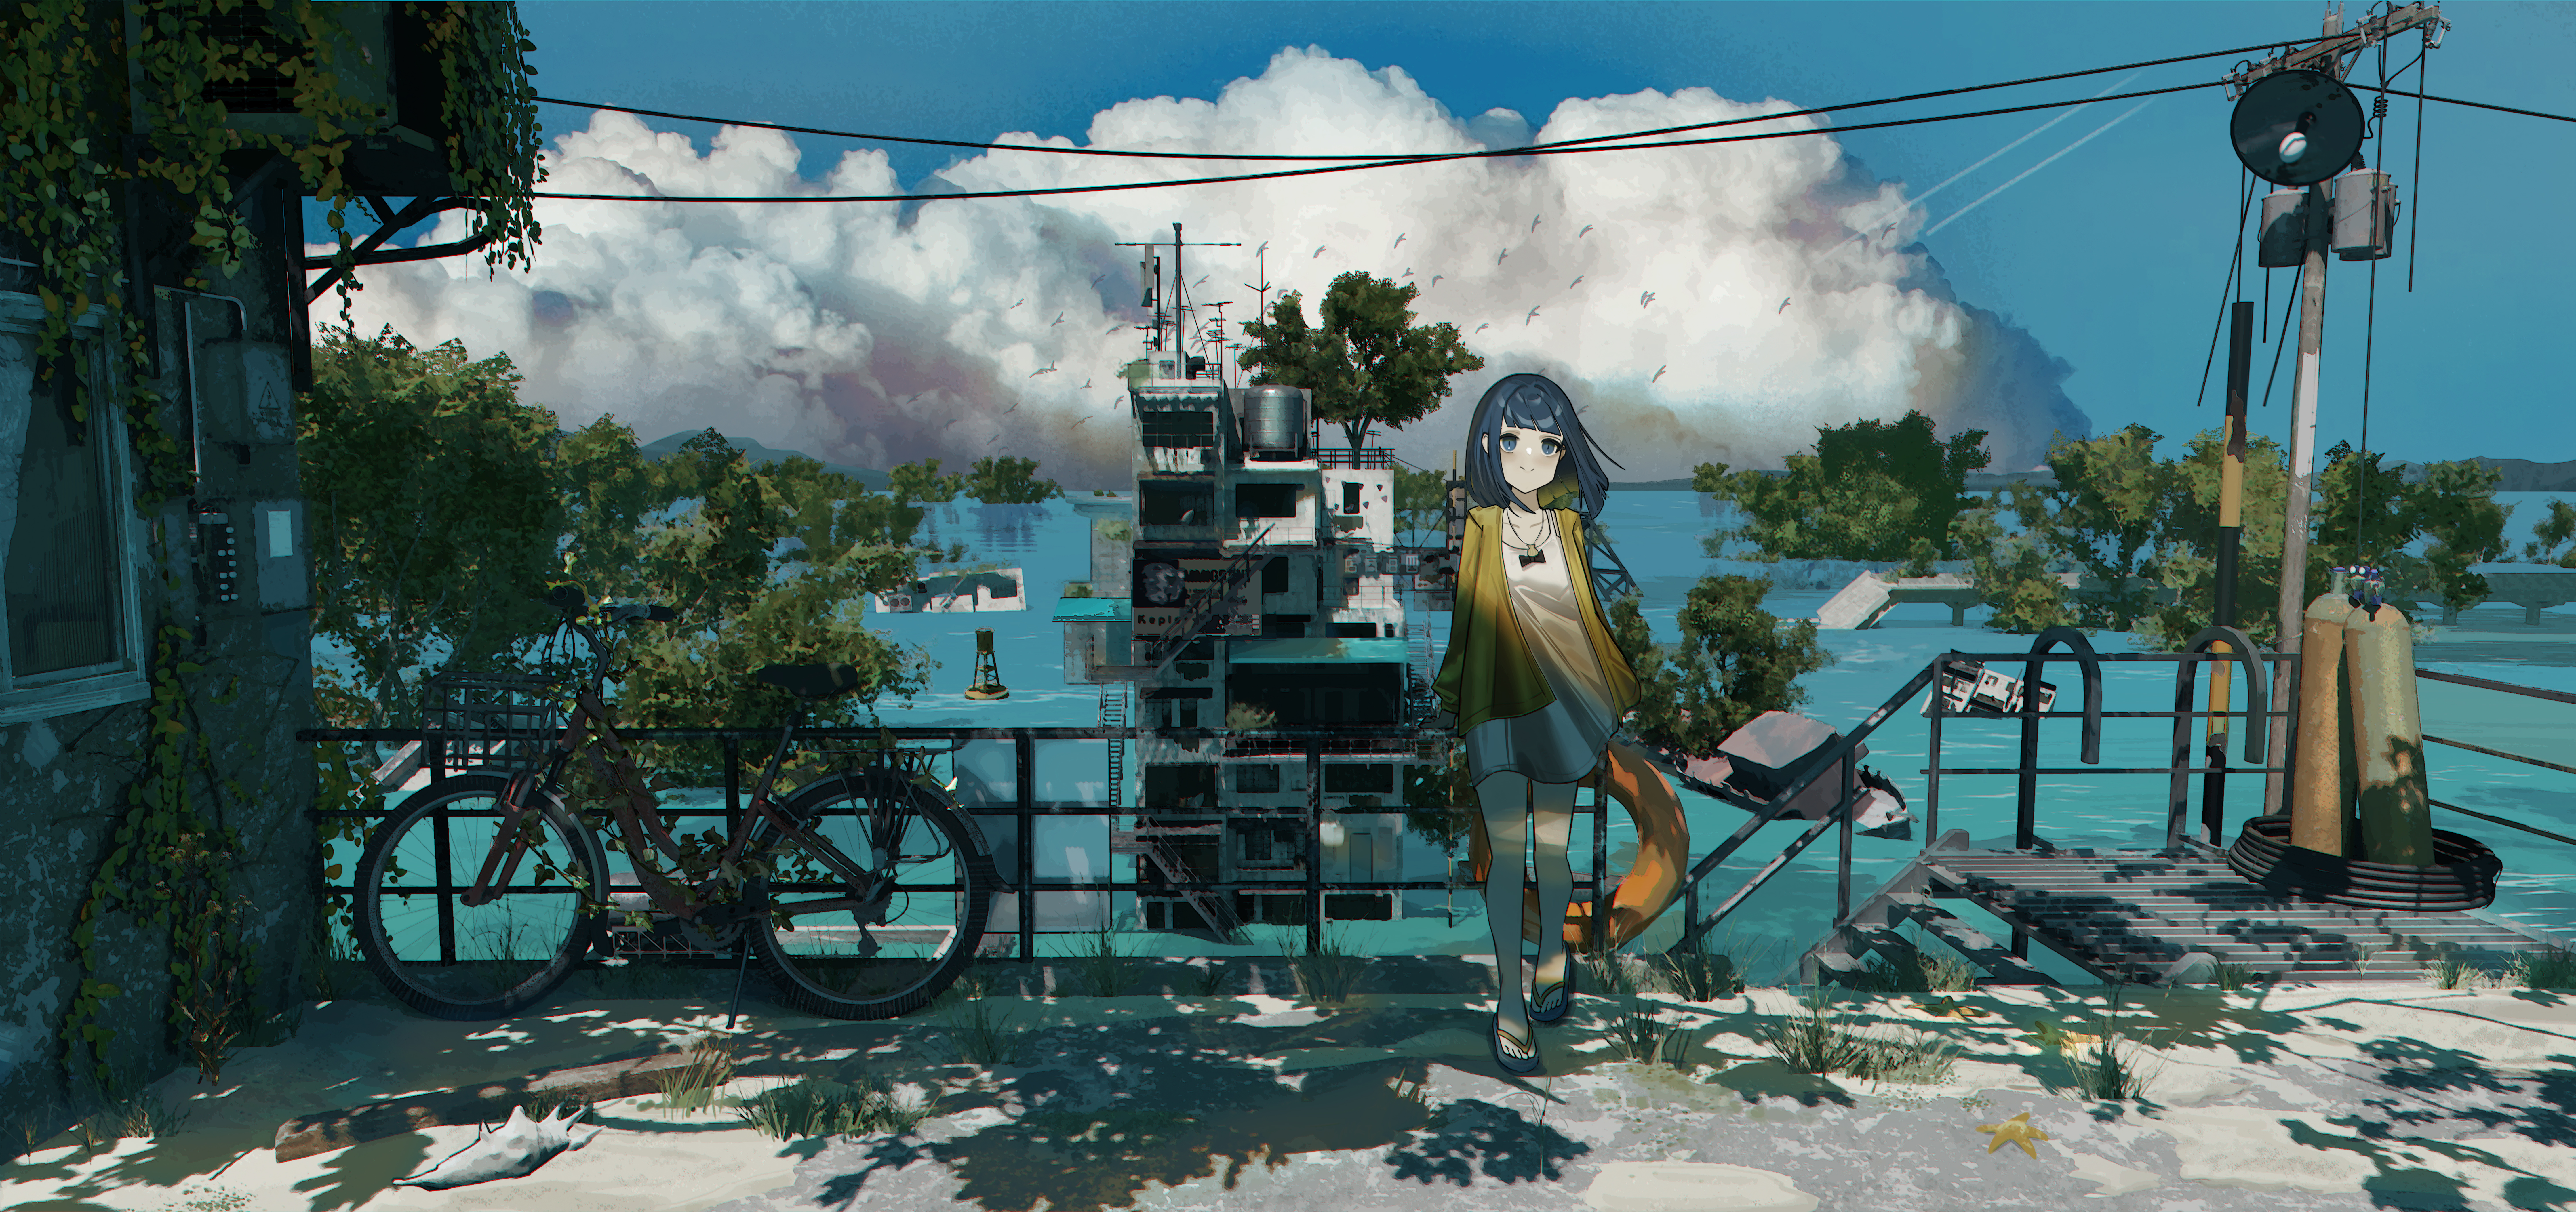 Anime 8951x4212 digital art digital painting artwork illustration anime girls clouds environment landscape street